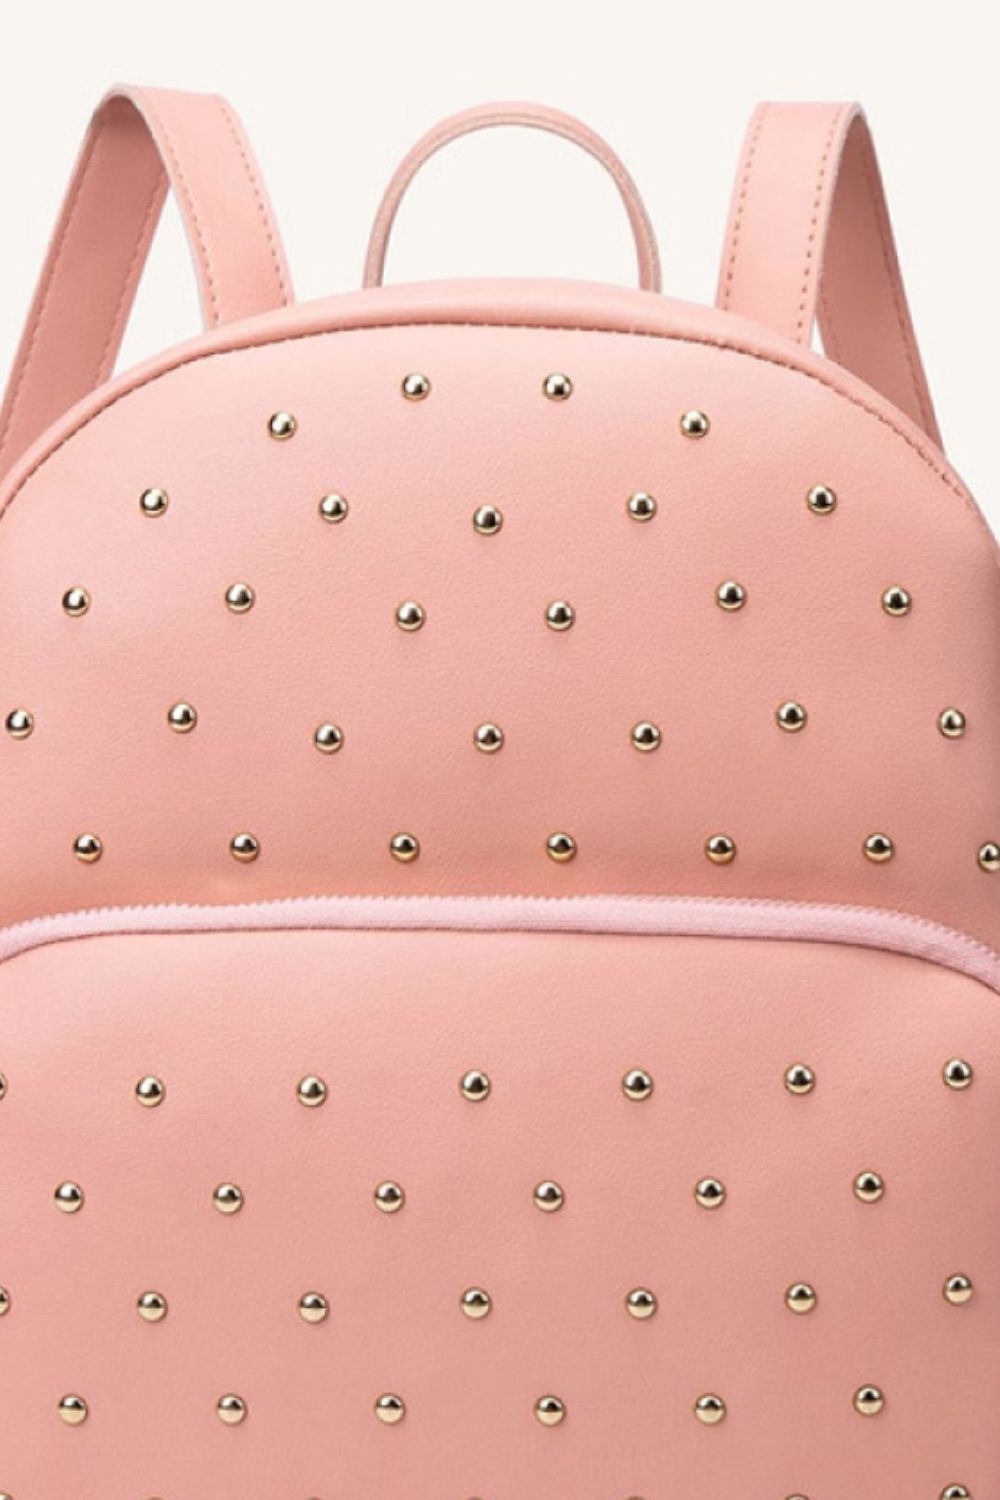 Studded PU Leather Backpack - Handbag - FITGGINS